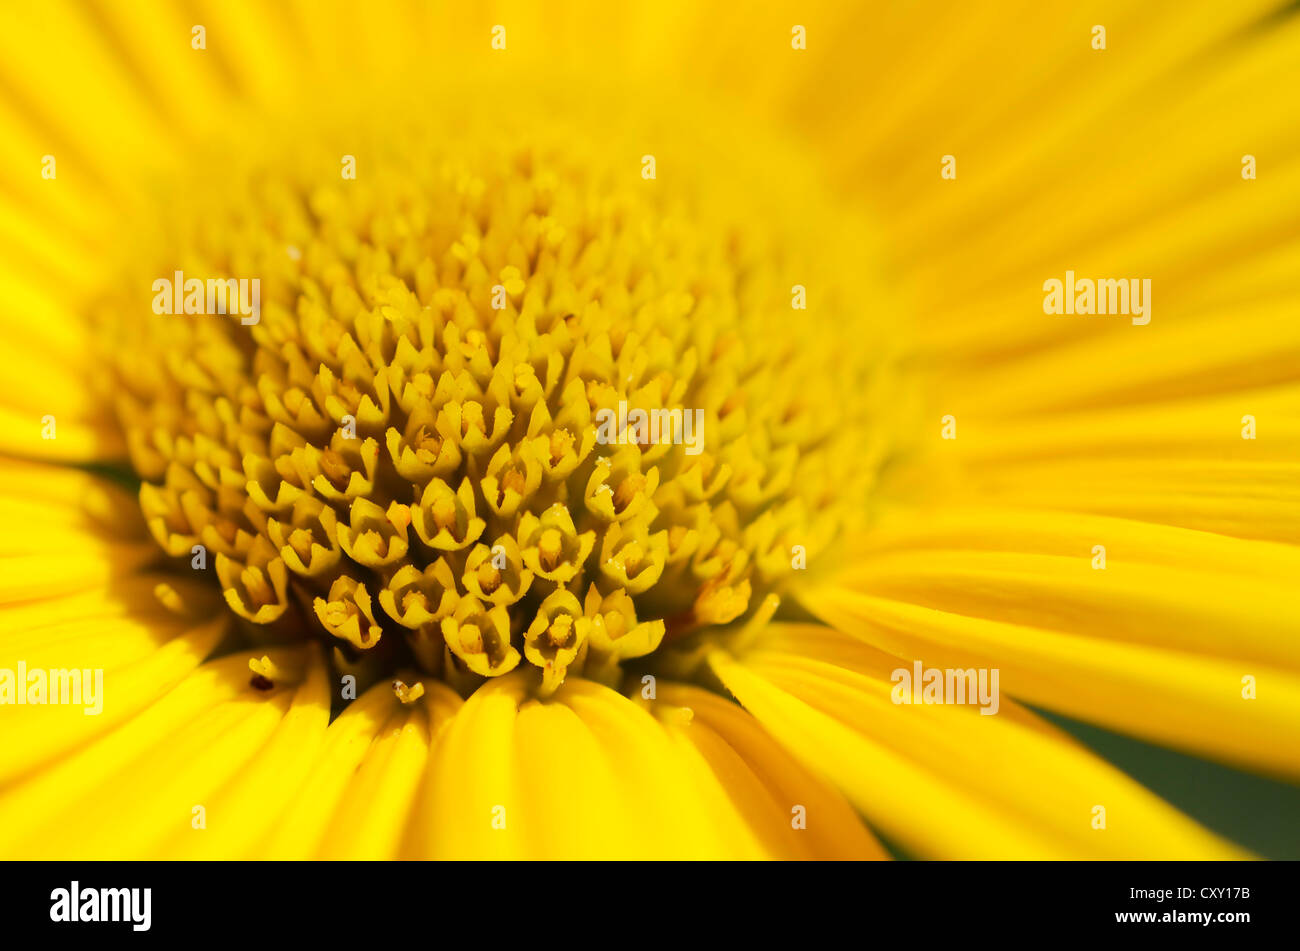 Yellow ox-eye daisy (Buphthalmum salicifolium), detail view Stock Photo